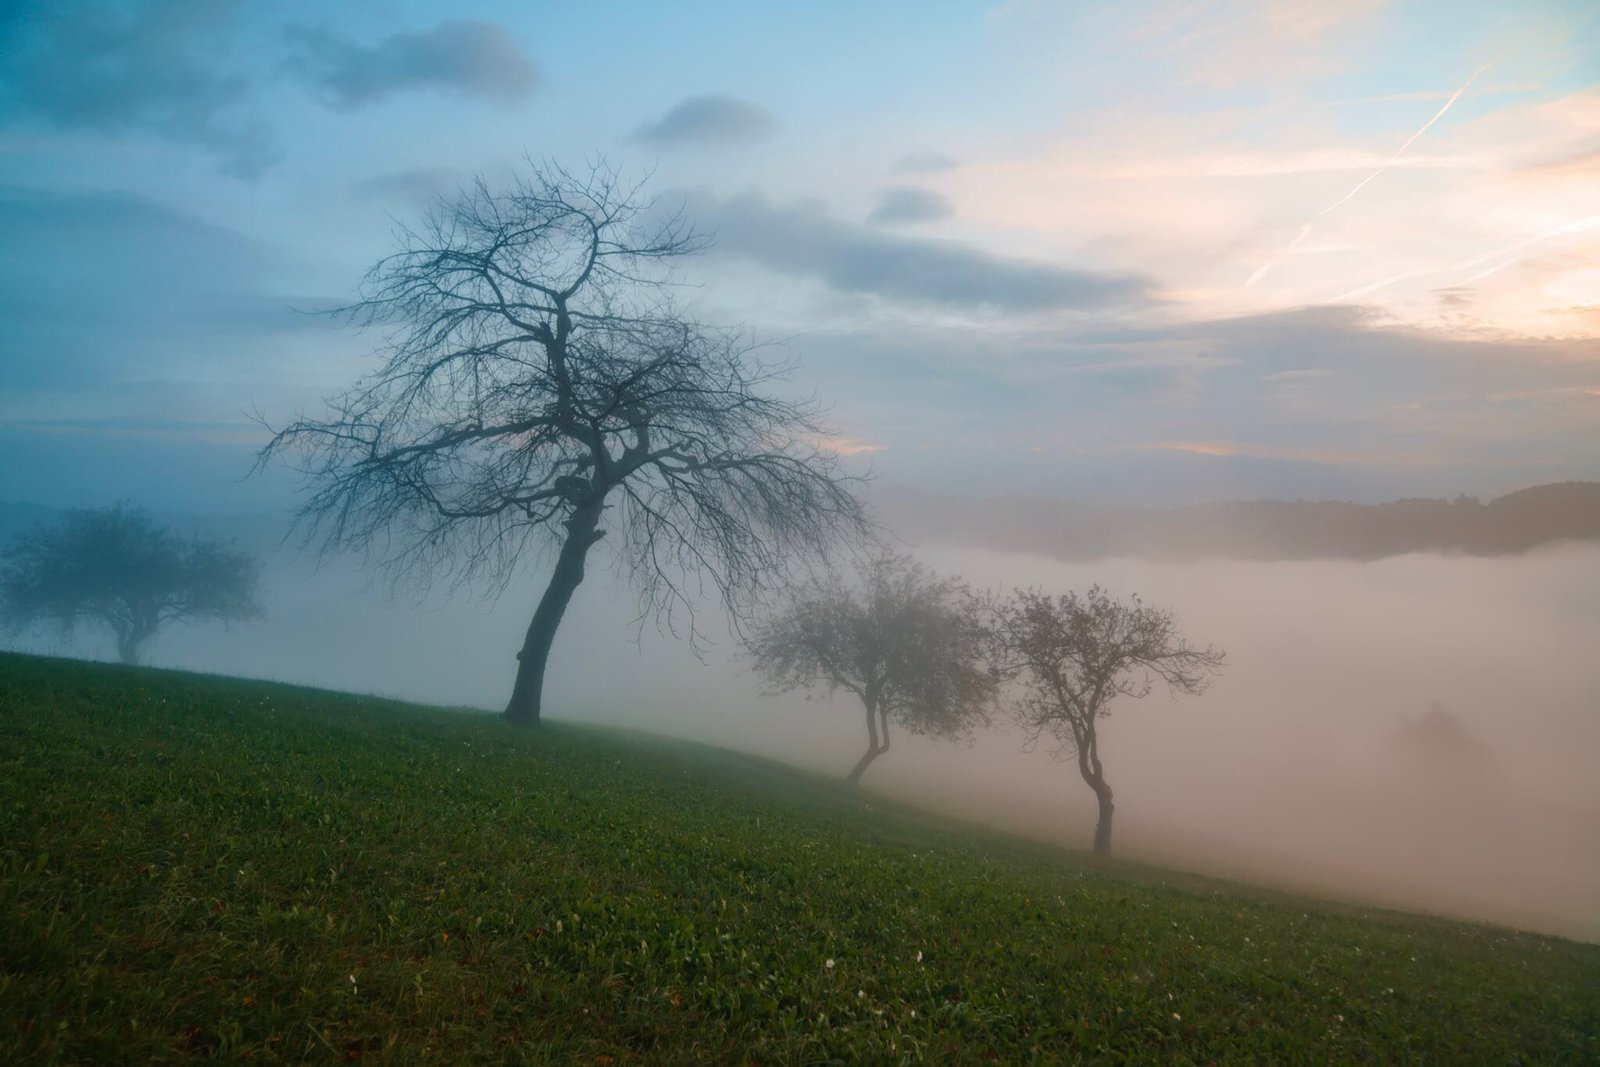 eerie morning in Slovenia